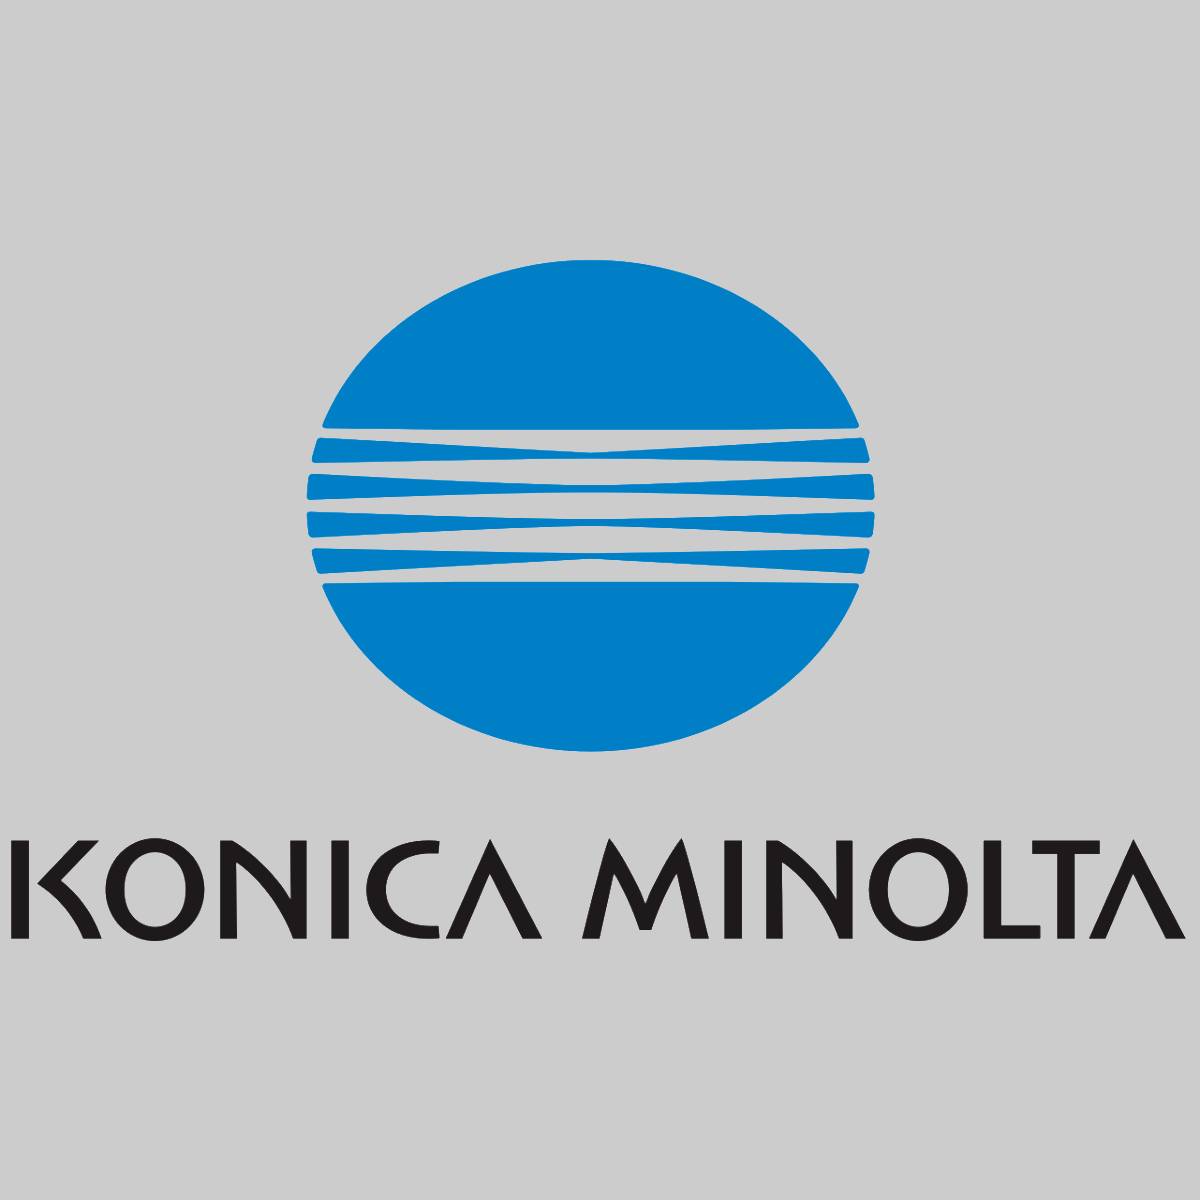 "Original Konica Minolta TN014 Black Toner A3VV150 für Bizhub 1052 1200 1250 225